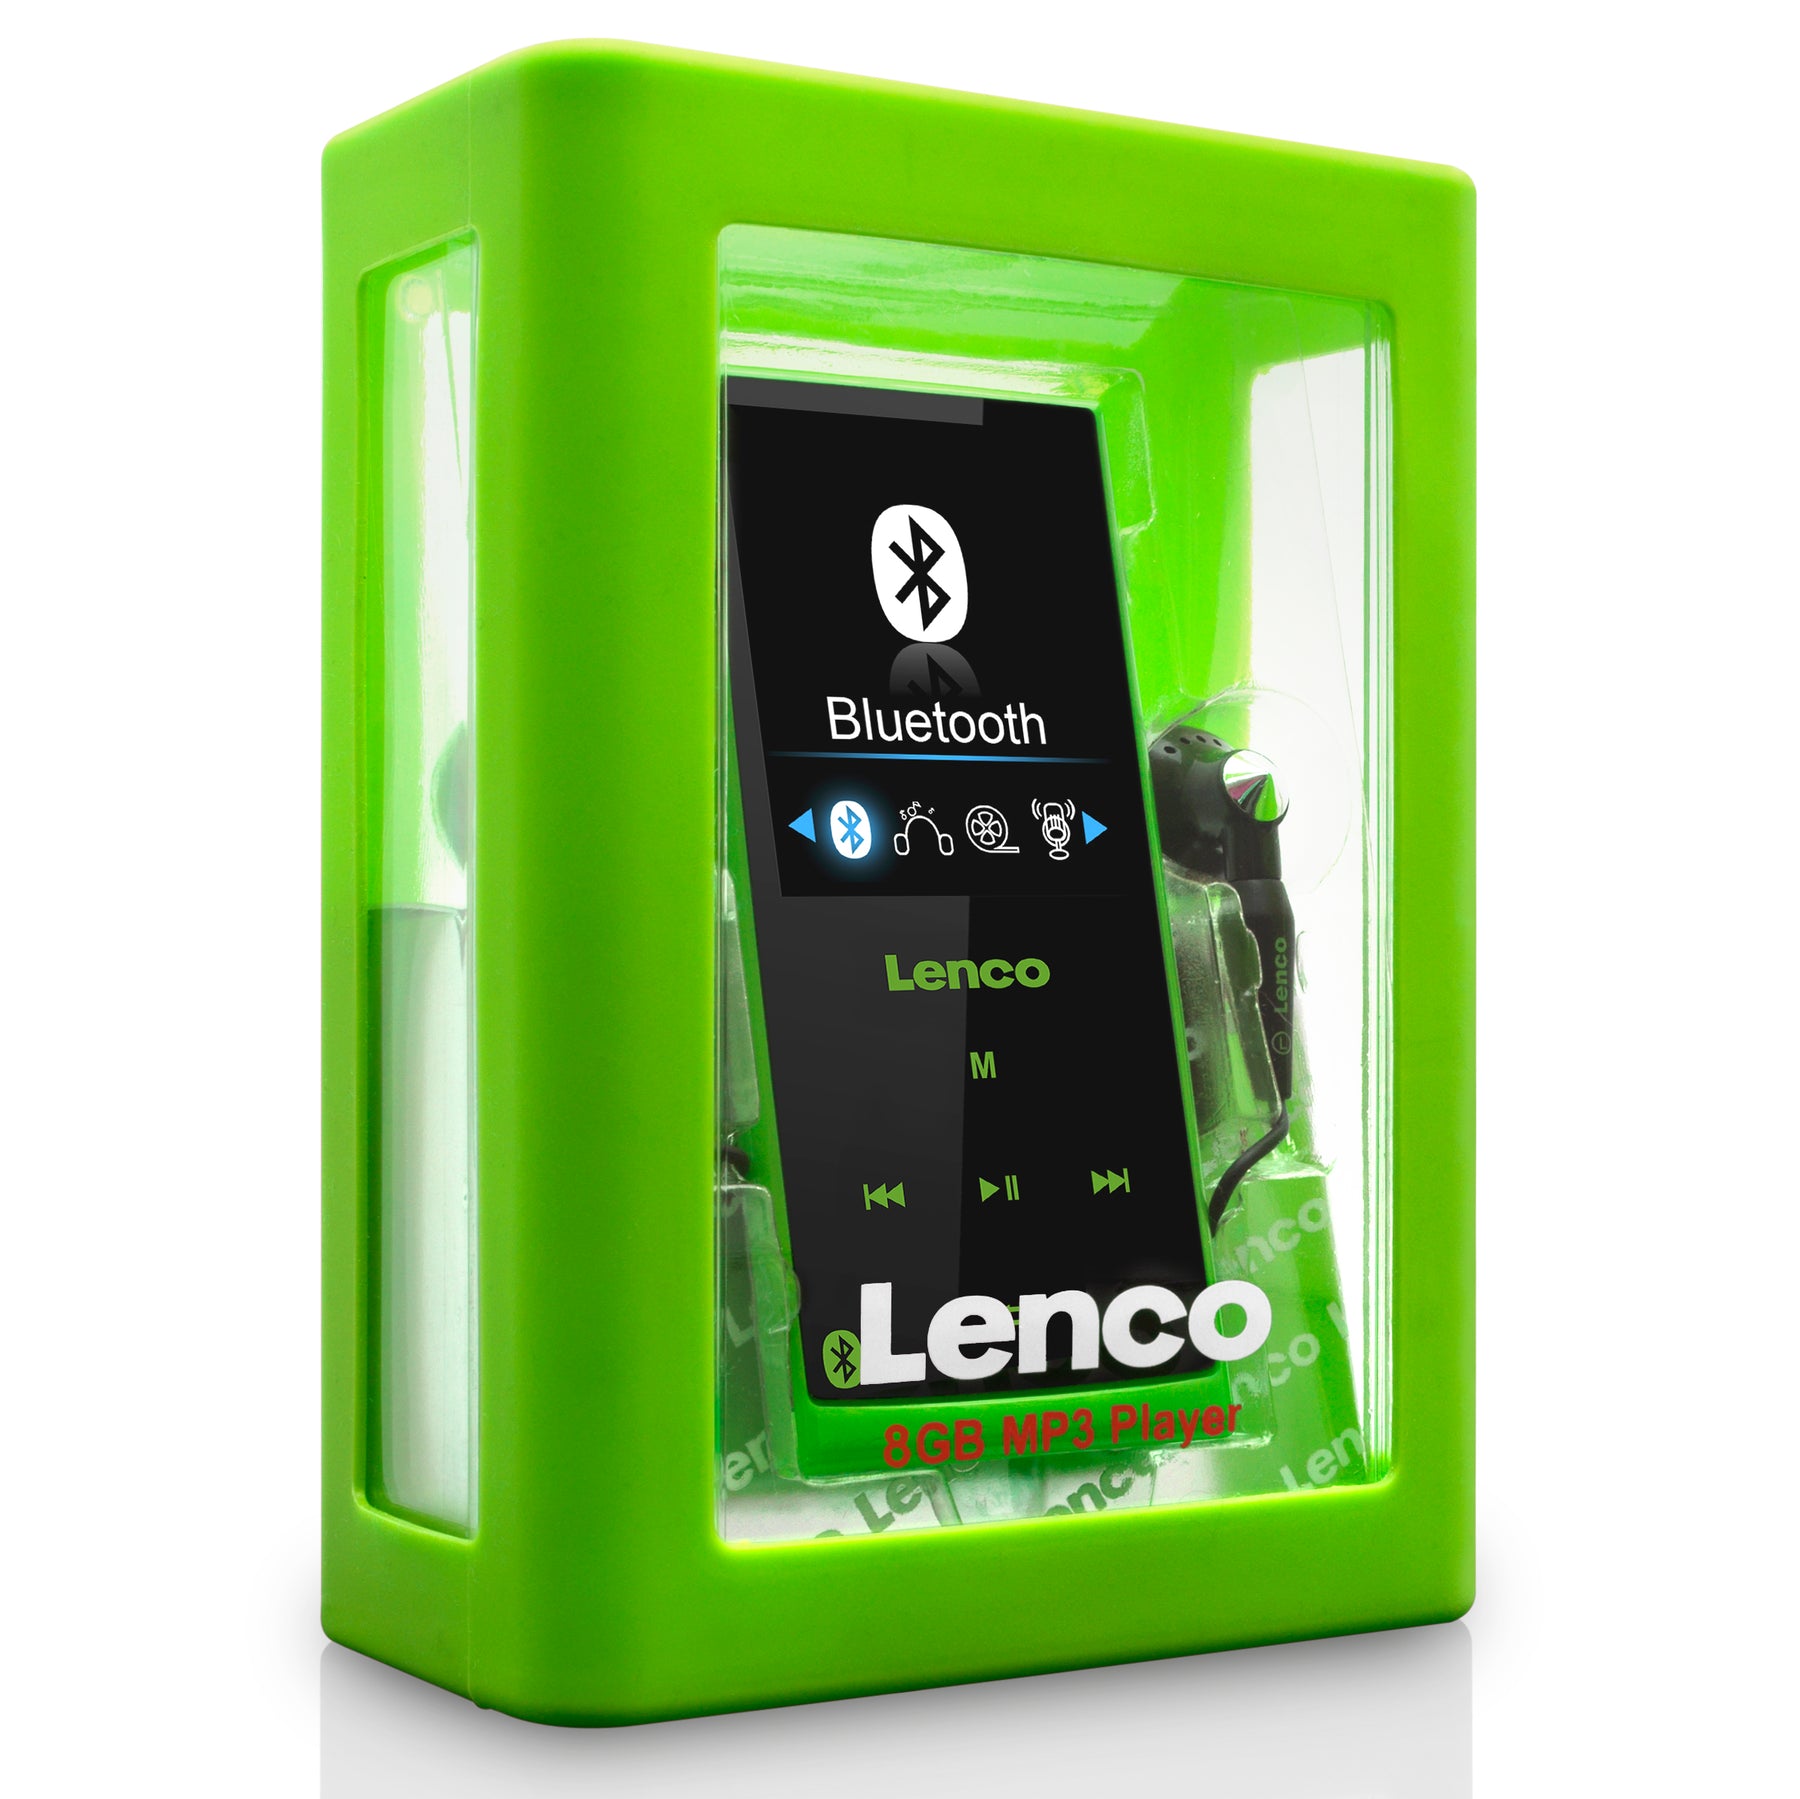 Lenco Xemio-760 BT Bluetooth® Lenco-Catalog 8GB - Green - memory – player MP3/MP4 with